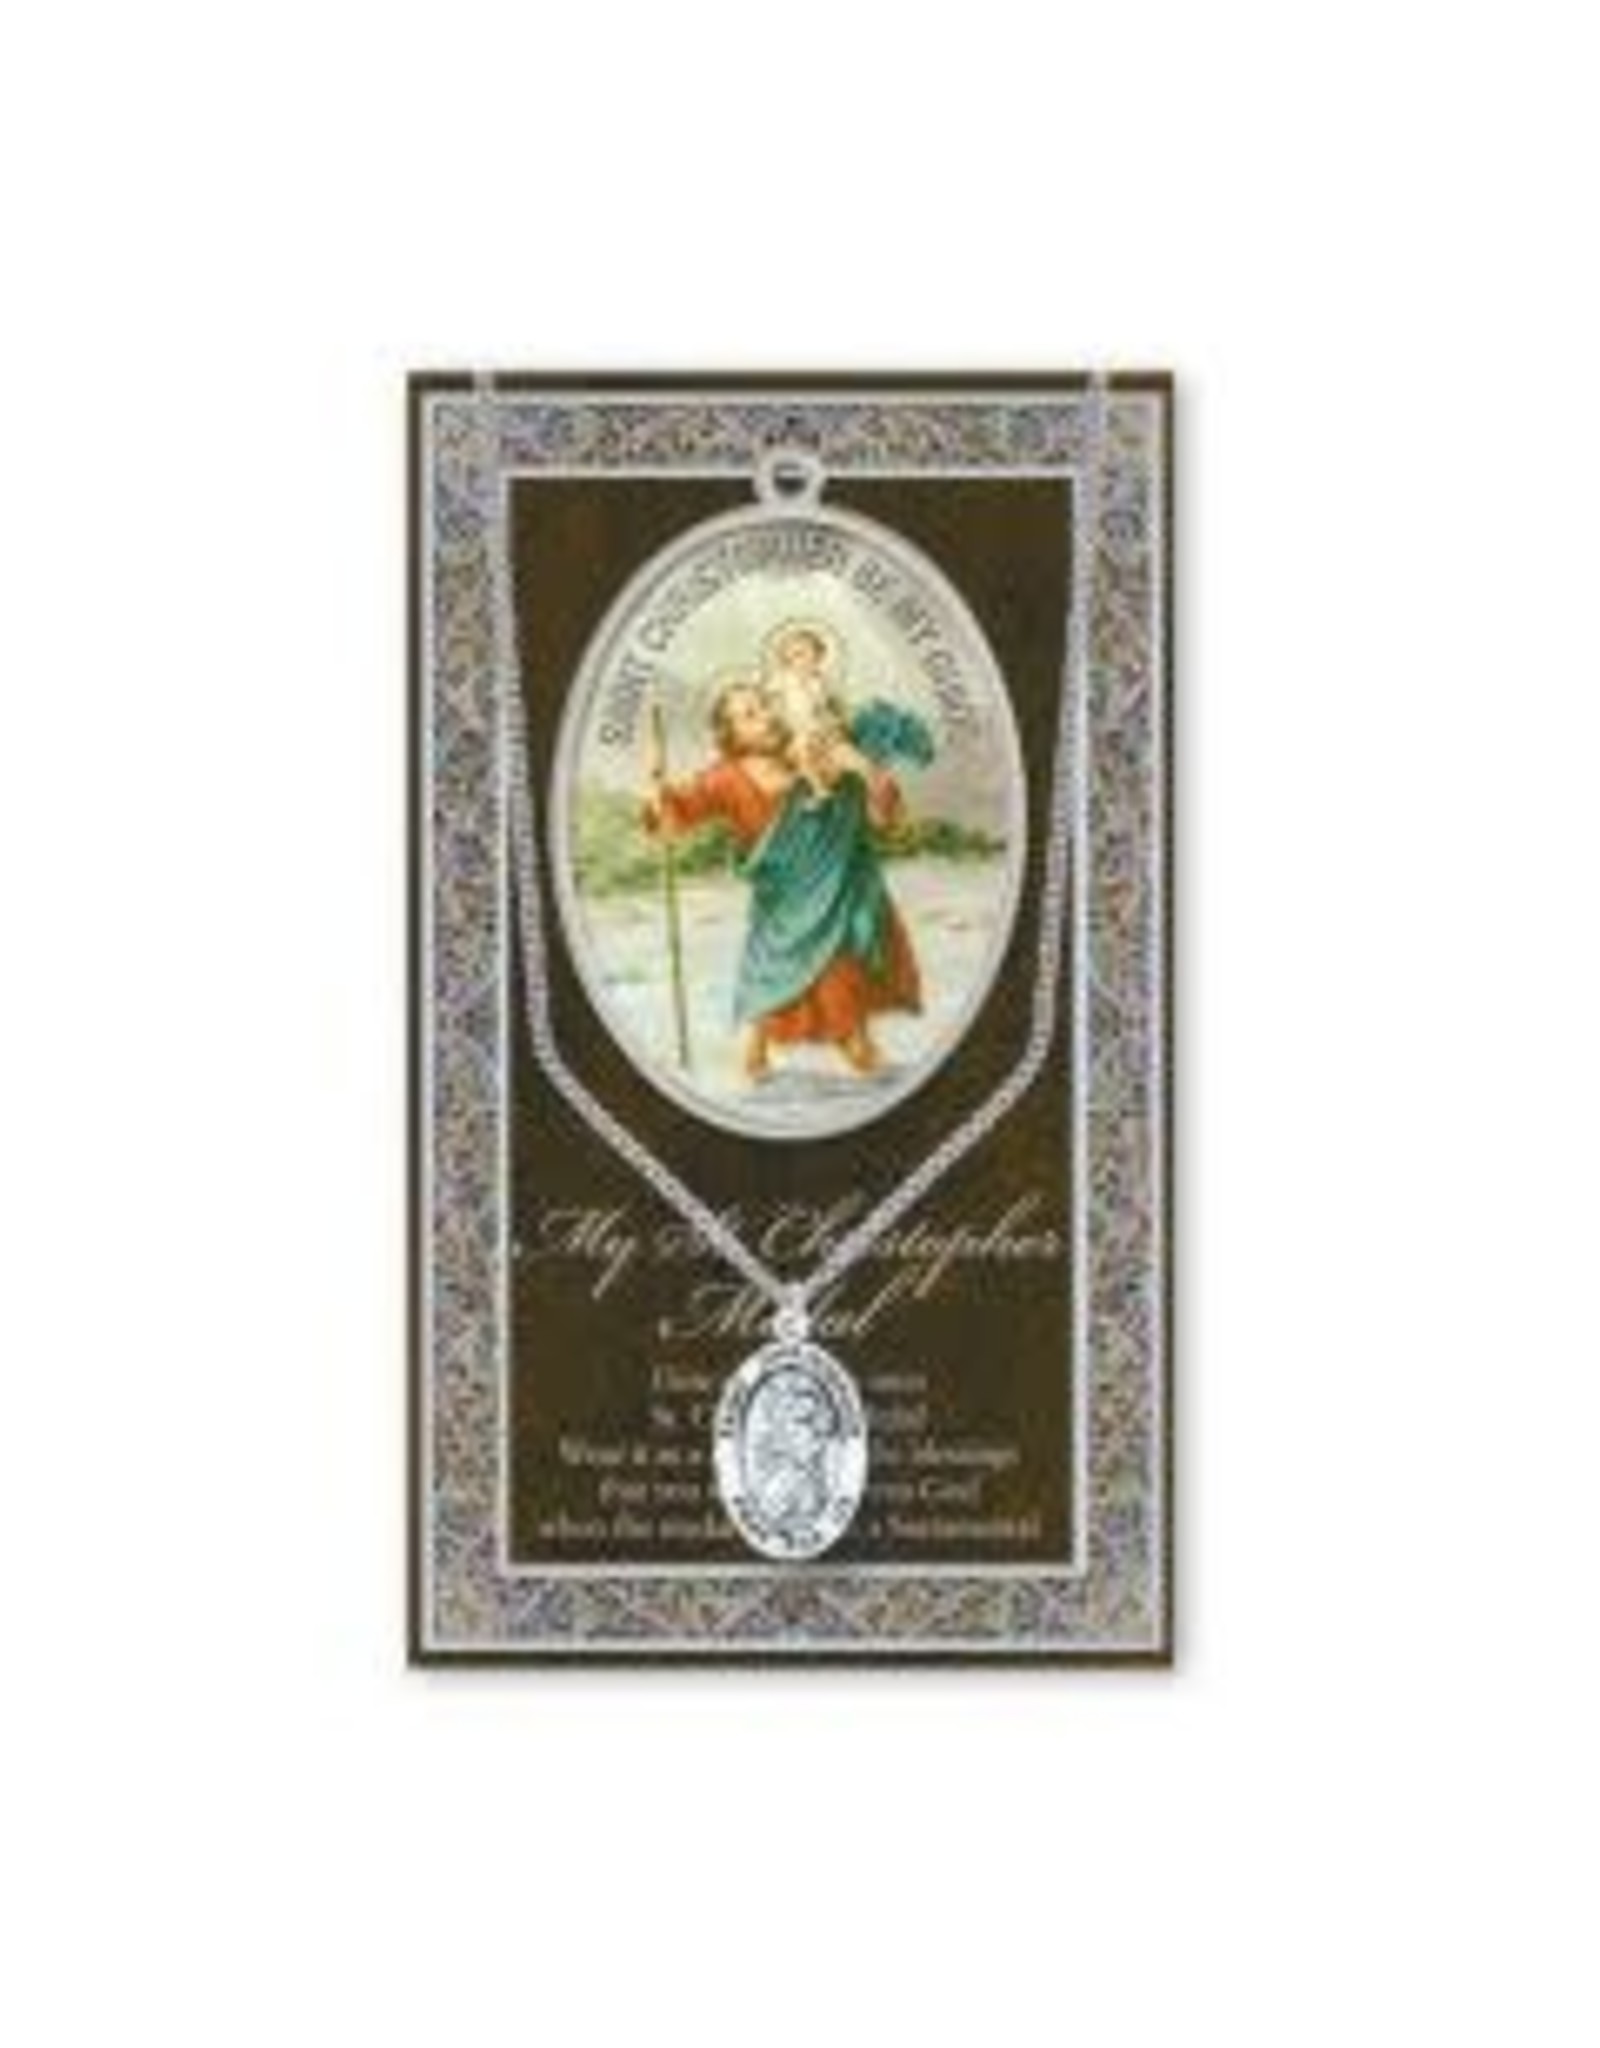 Hirten Saint Medal with Prayer Card - St. Christopher